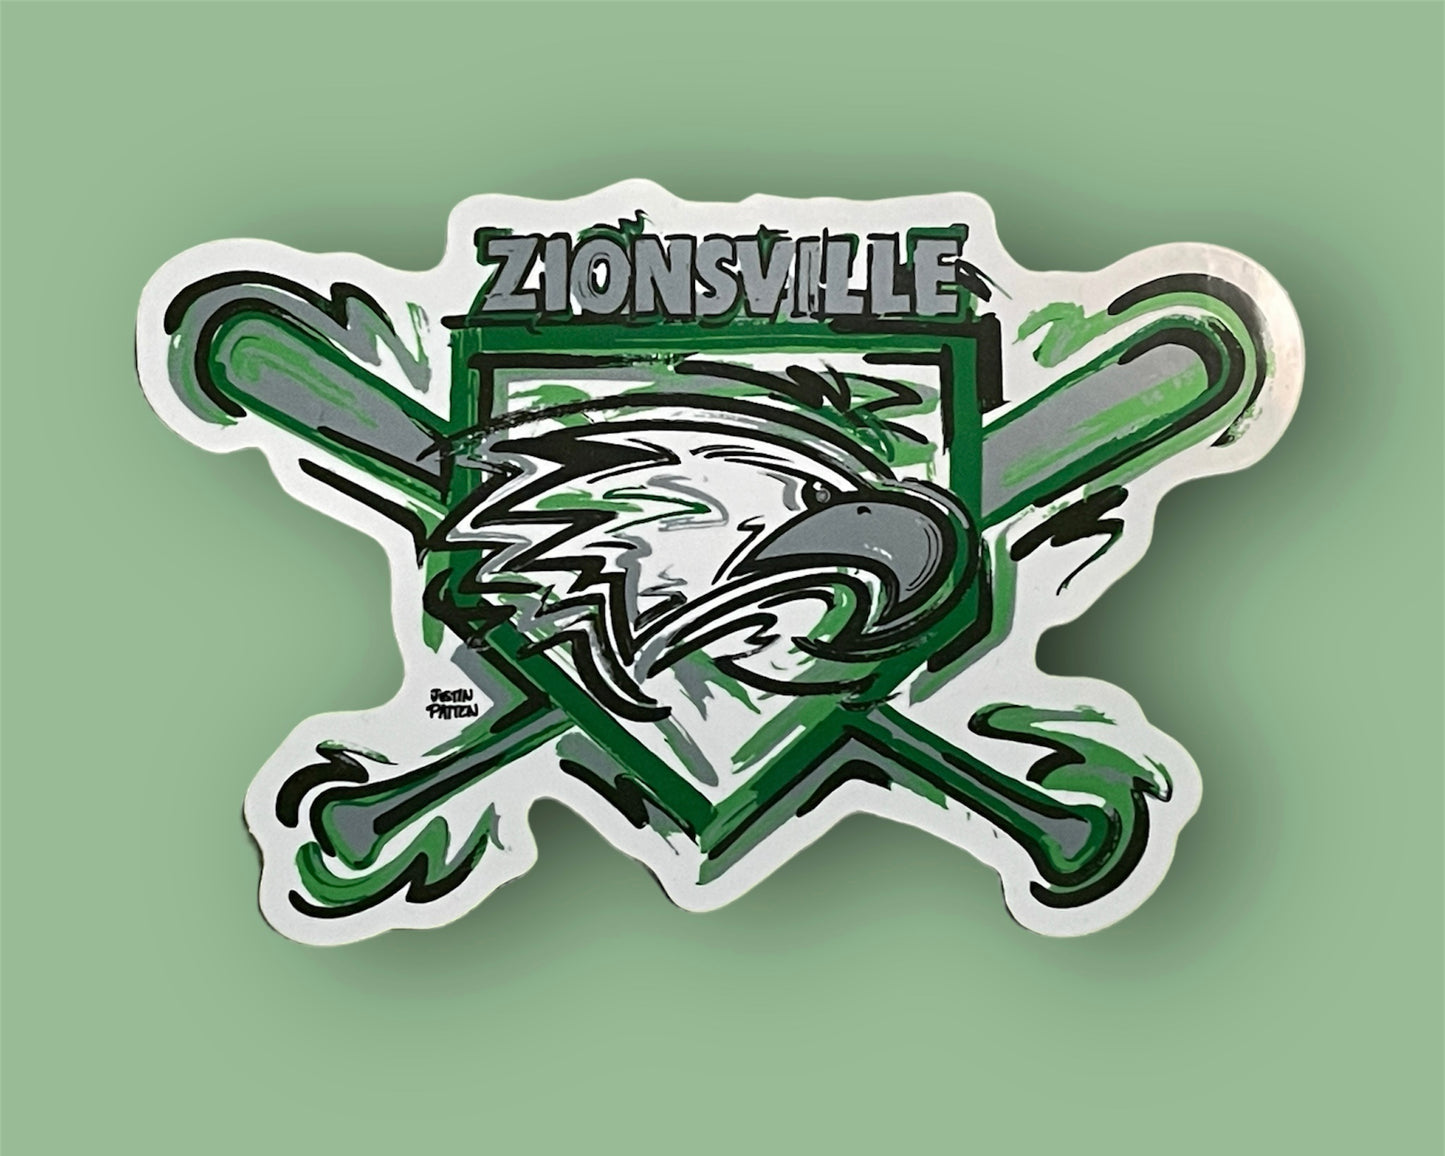 Zionsville Indiana Baseball Sticker by Justin Patten